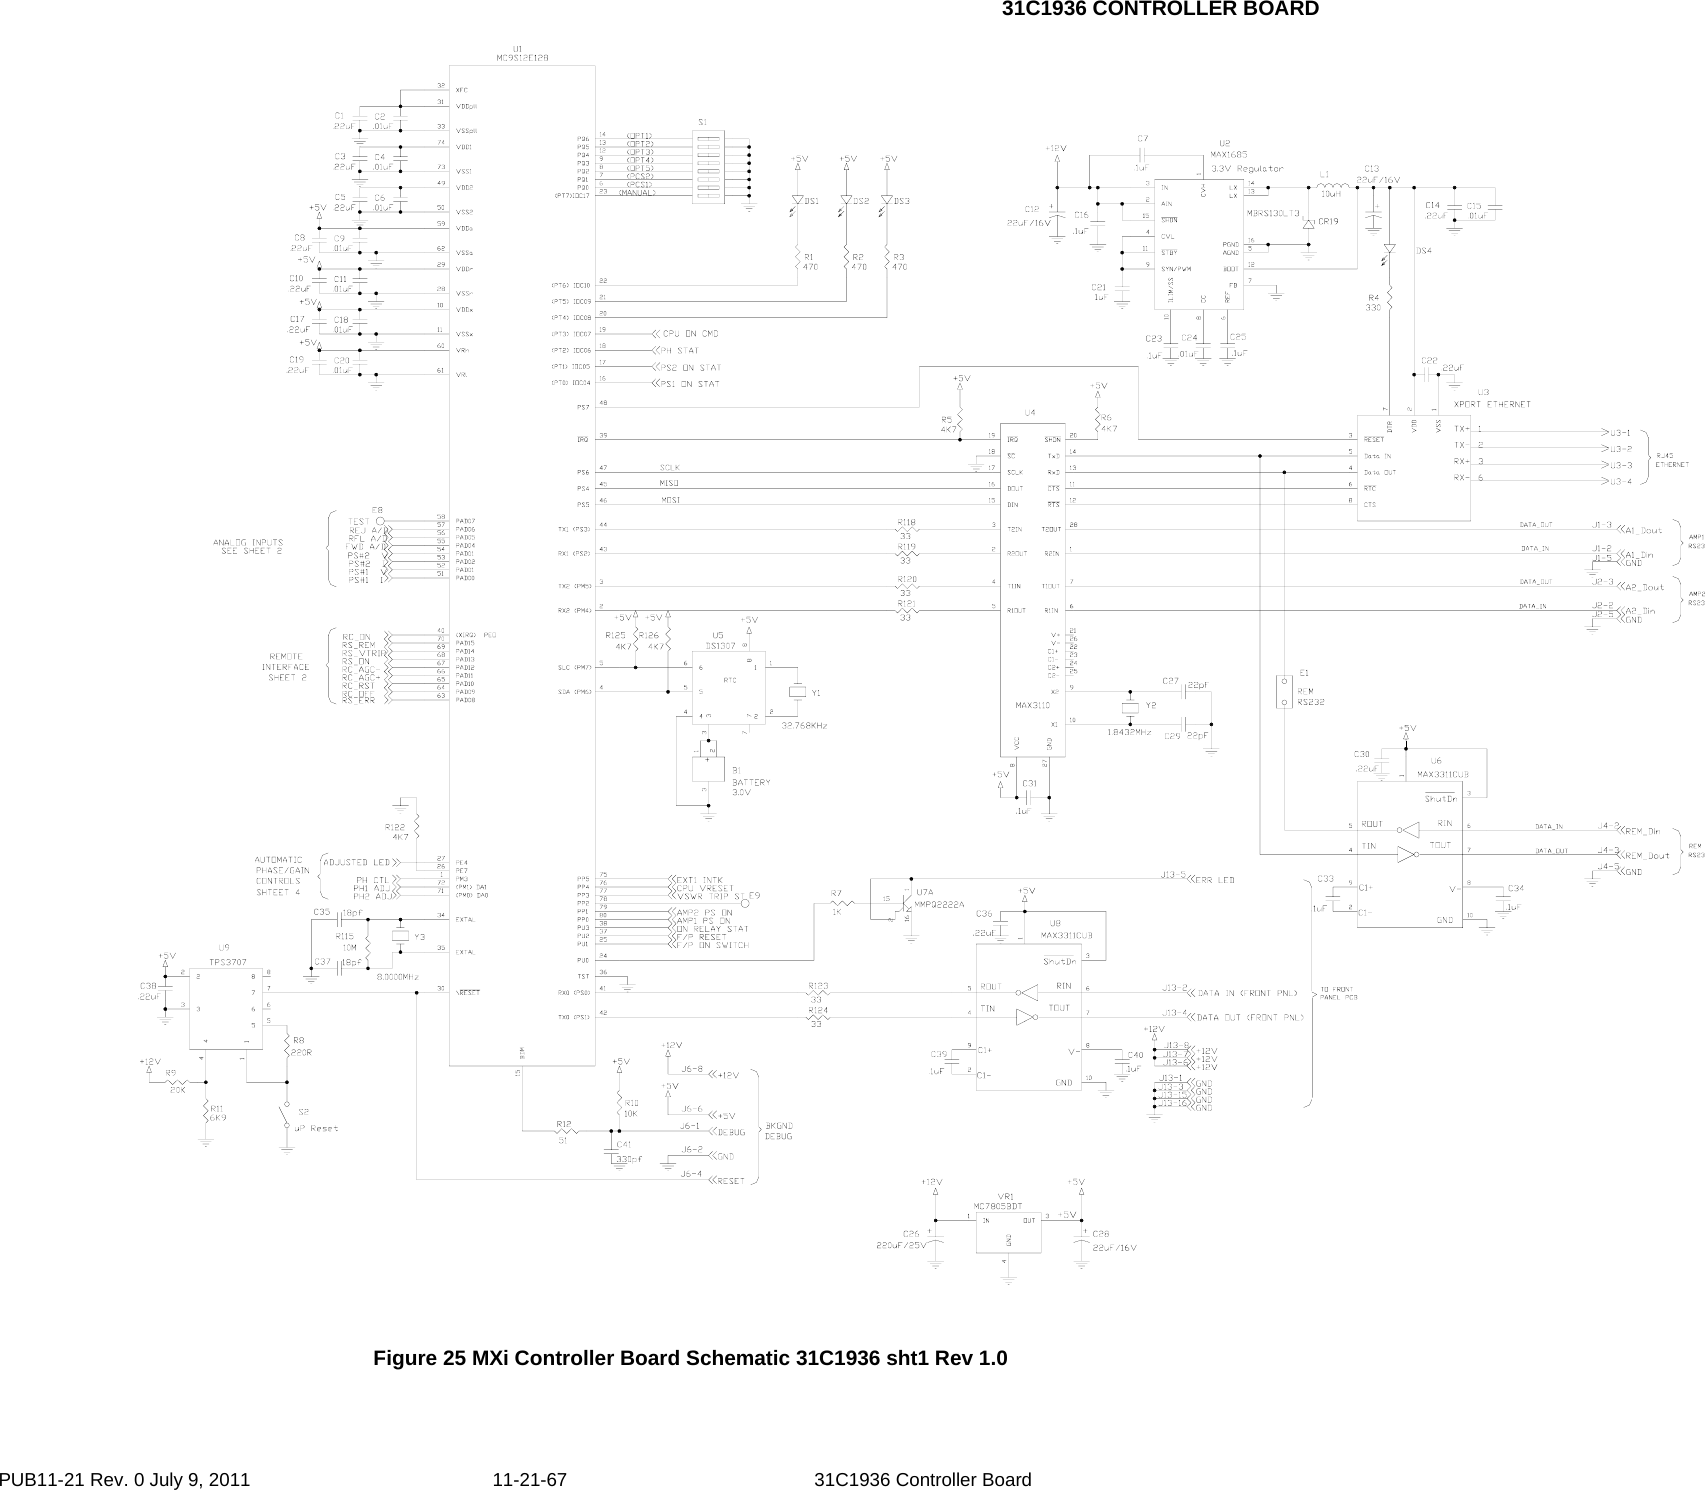 31C1936 CONTROLLER BOARD          Figure 25 MXi Controller Board Schematic 31C1936 sht1 Rev 1.0  PUB11-21 Rev. 0 July 9, 2011  11-21-67  31C1936 Controller Board  